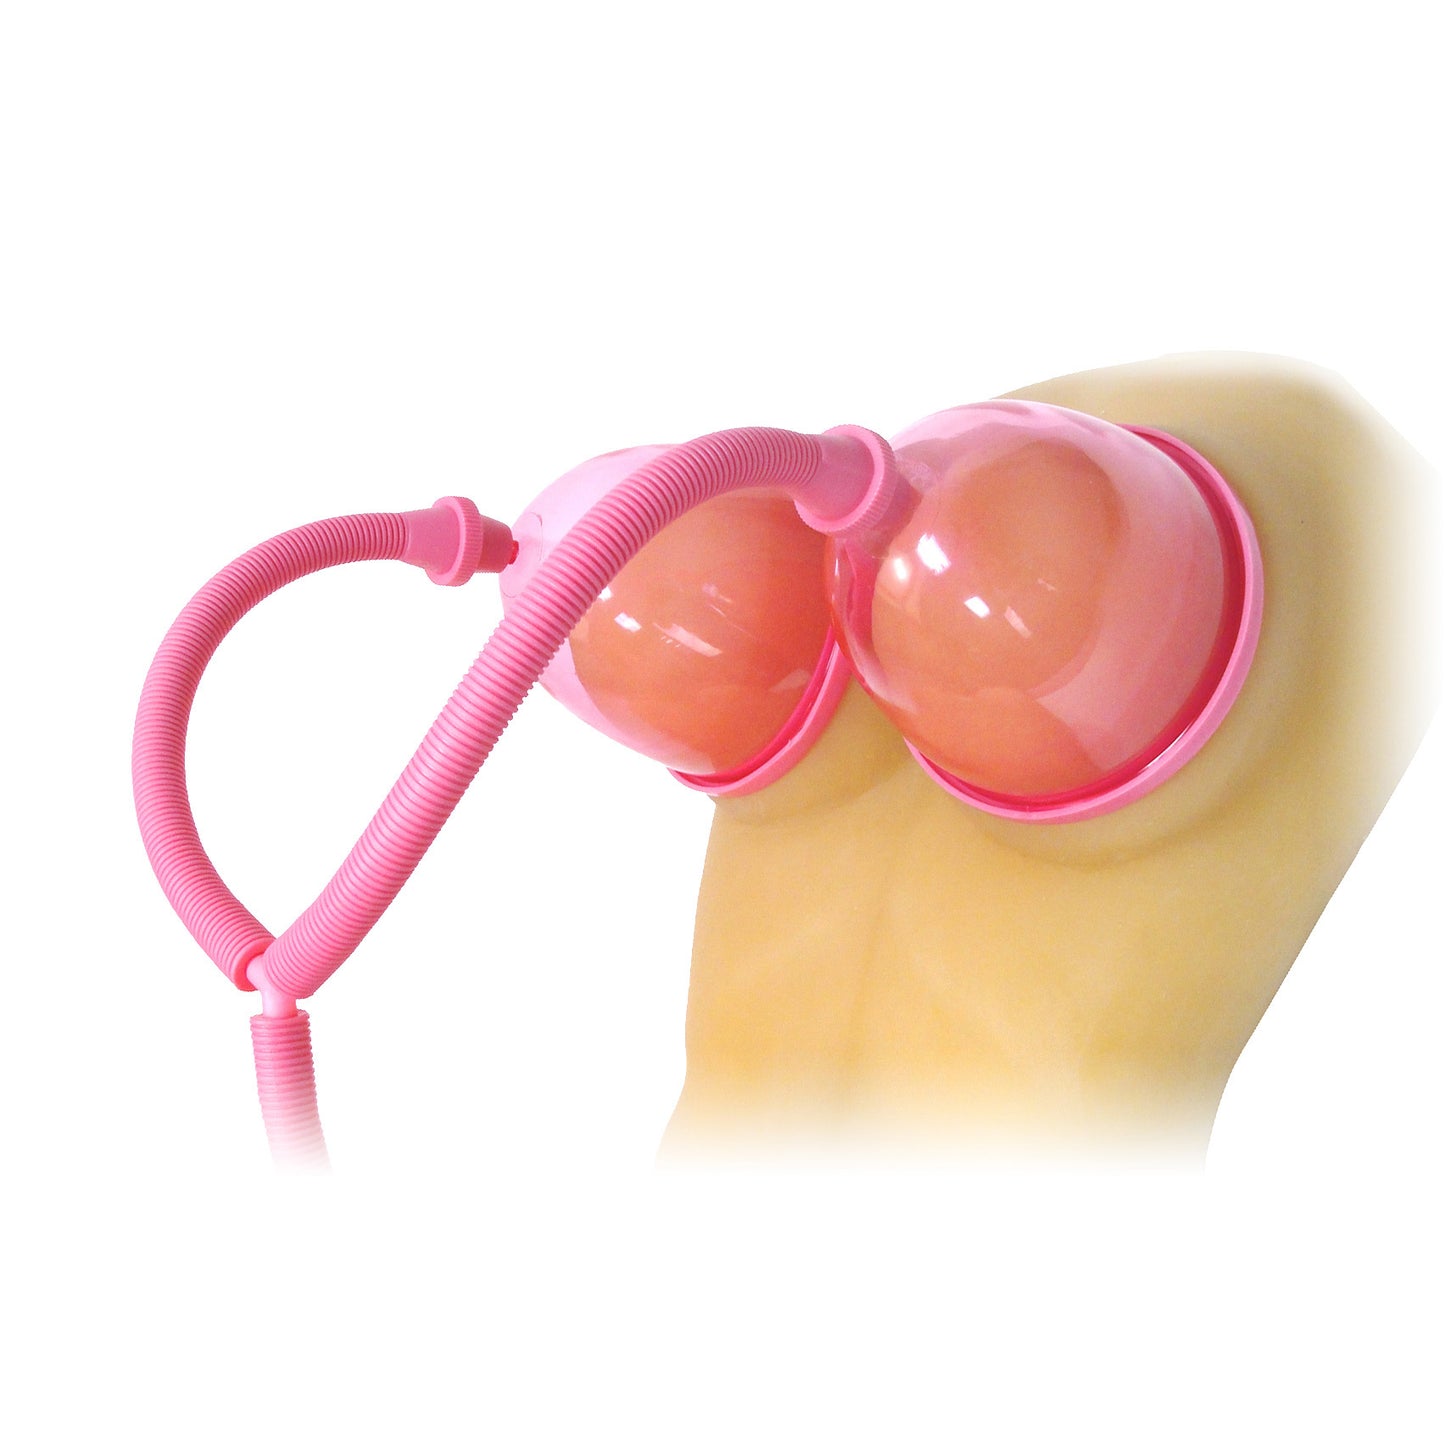 Pink Breast Pumps - UABDSM